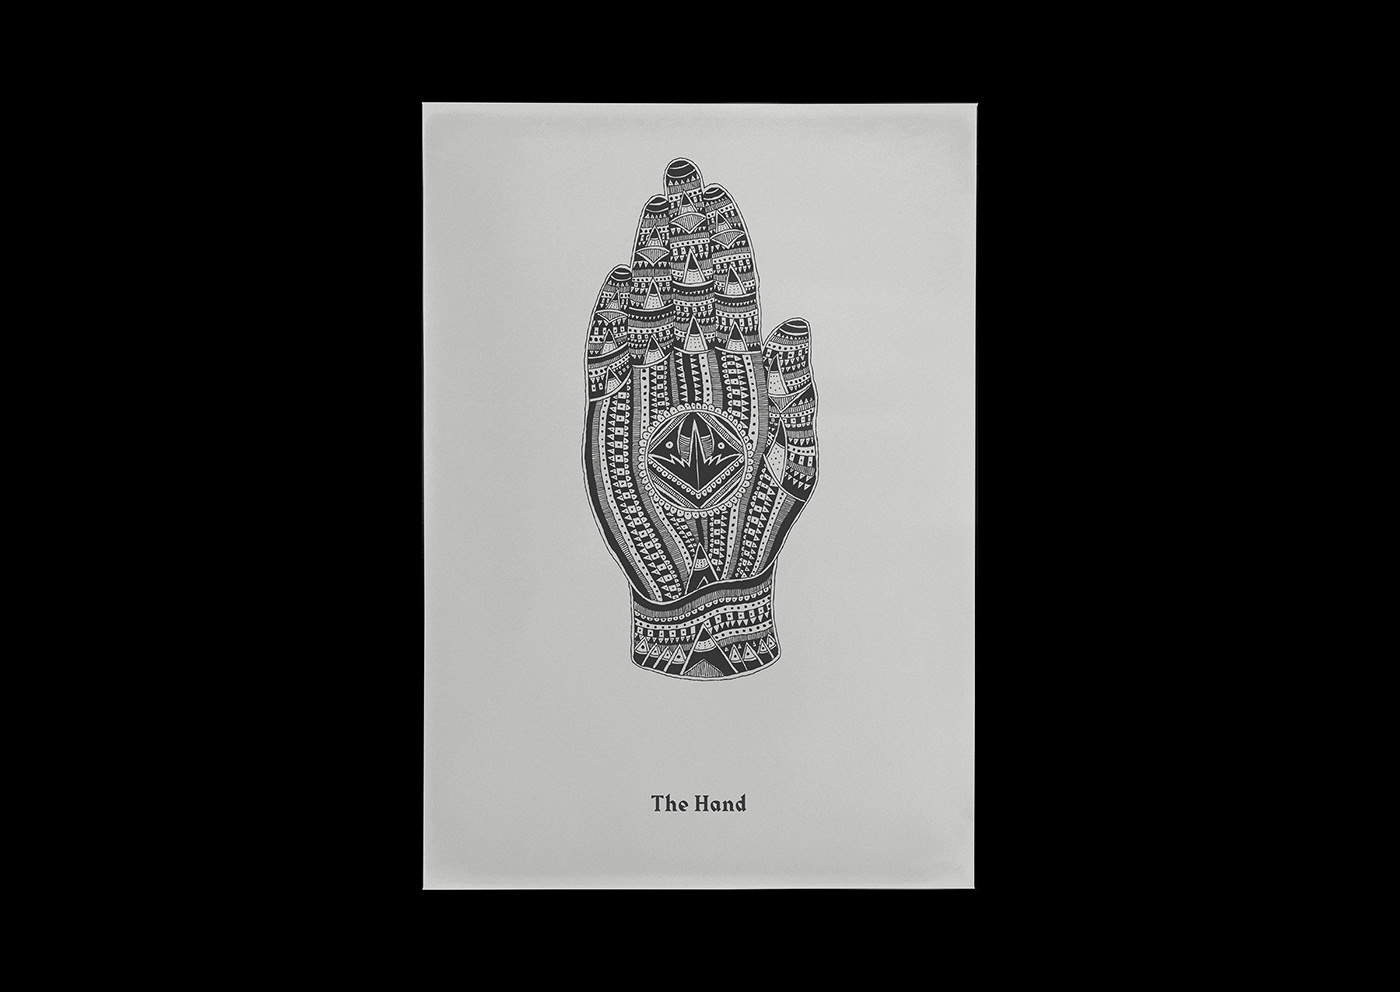 Adobe Portfolio holy Buddha gandhi dalai jesus ganesha bird hand serenity line geometry Hipster lifestyle pattern black